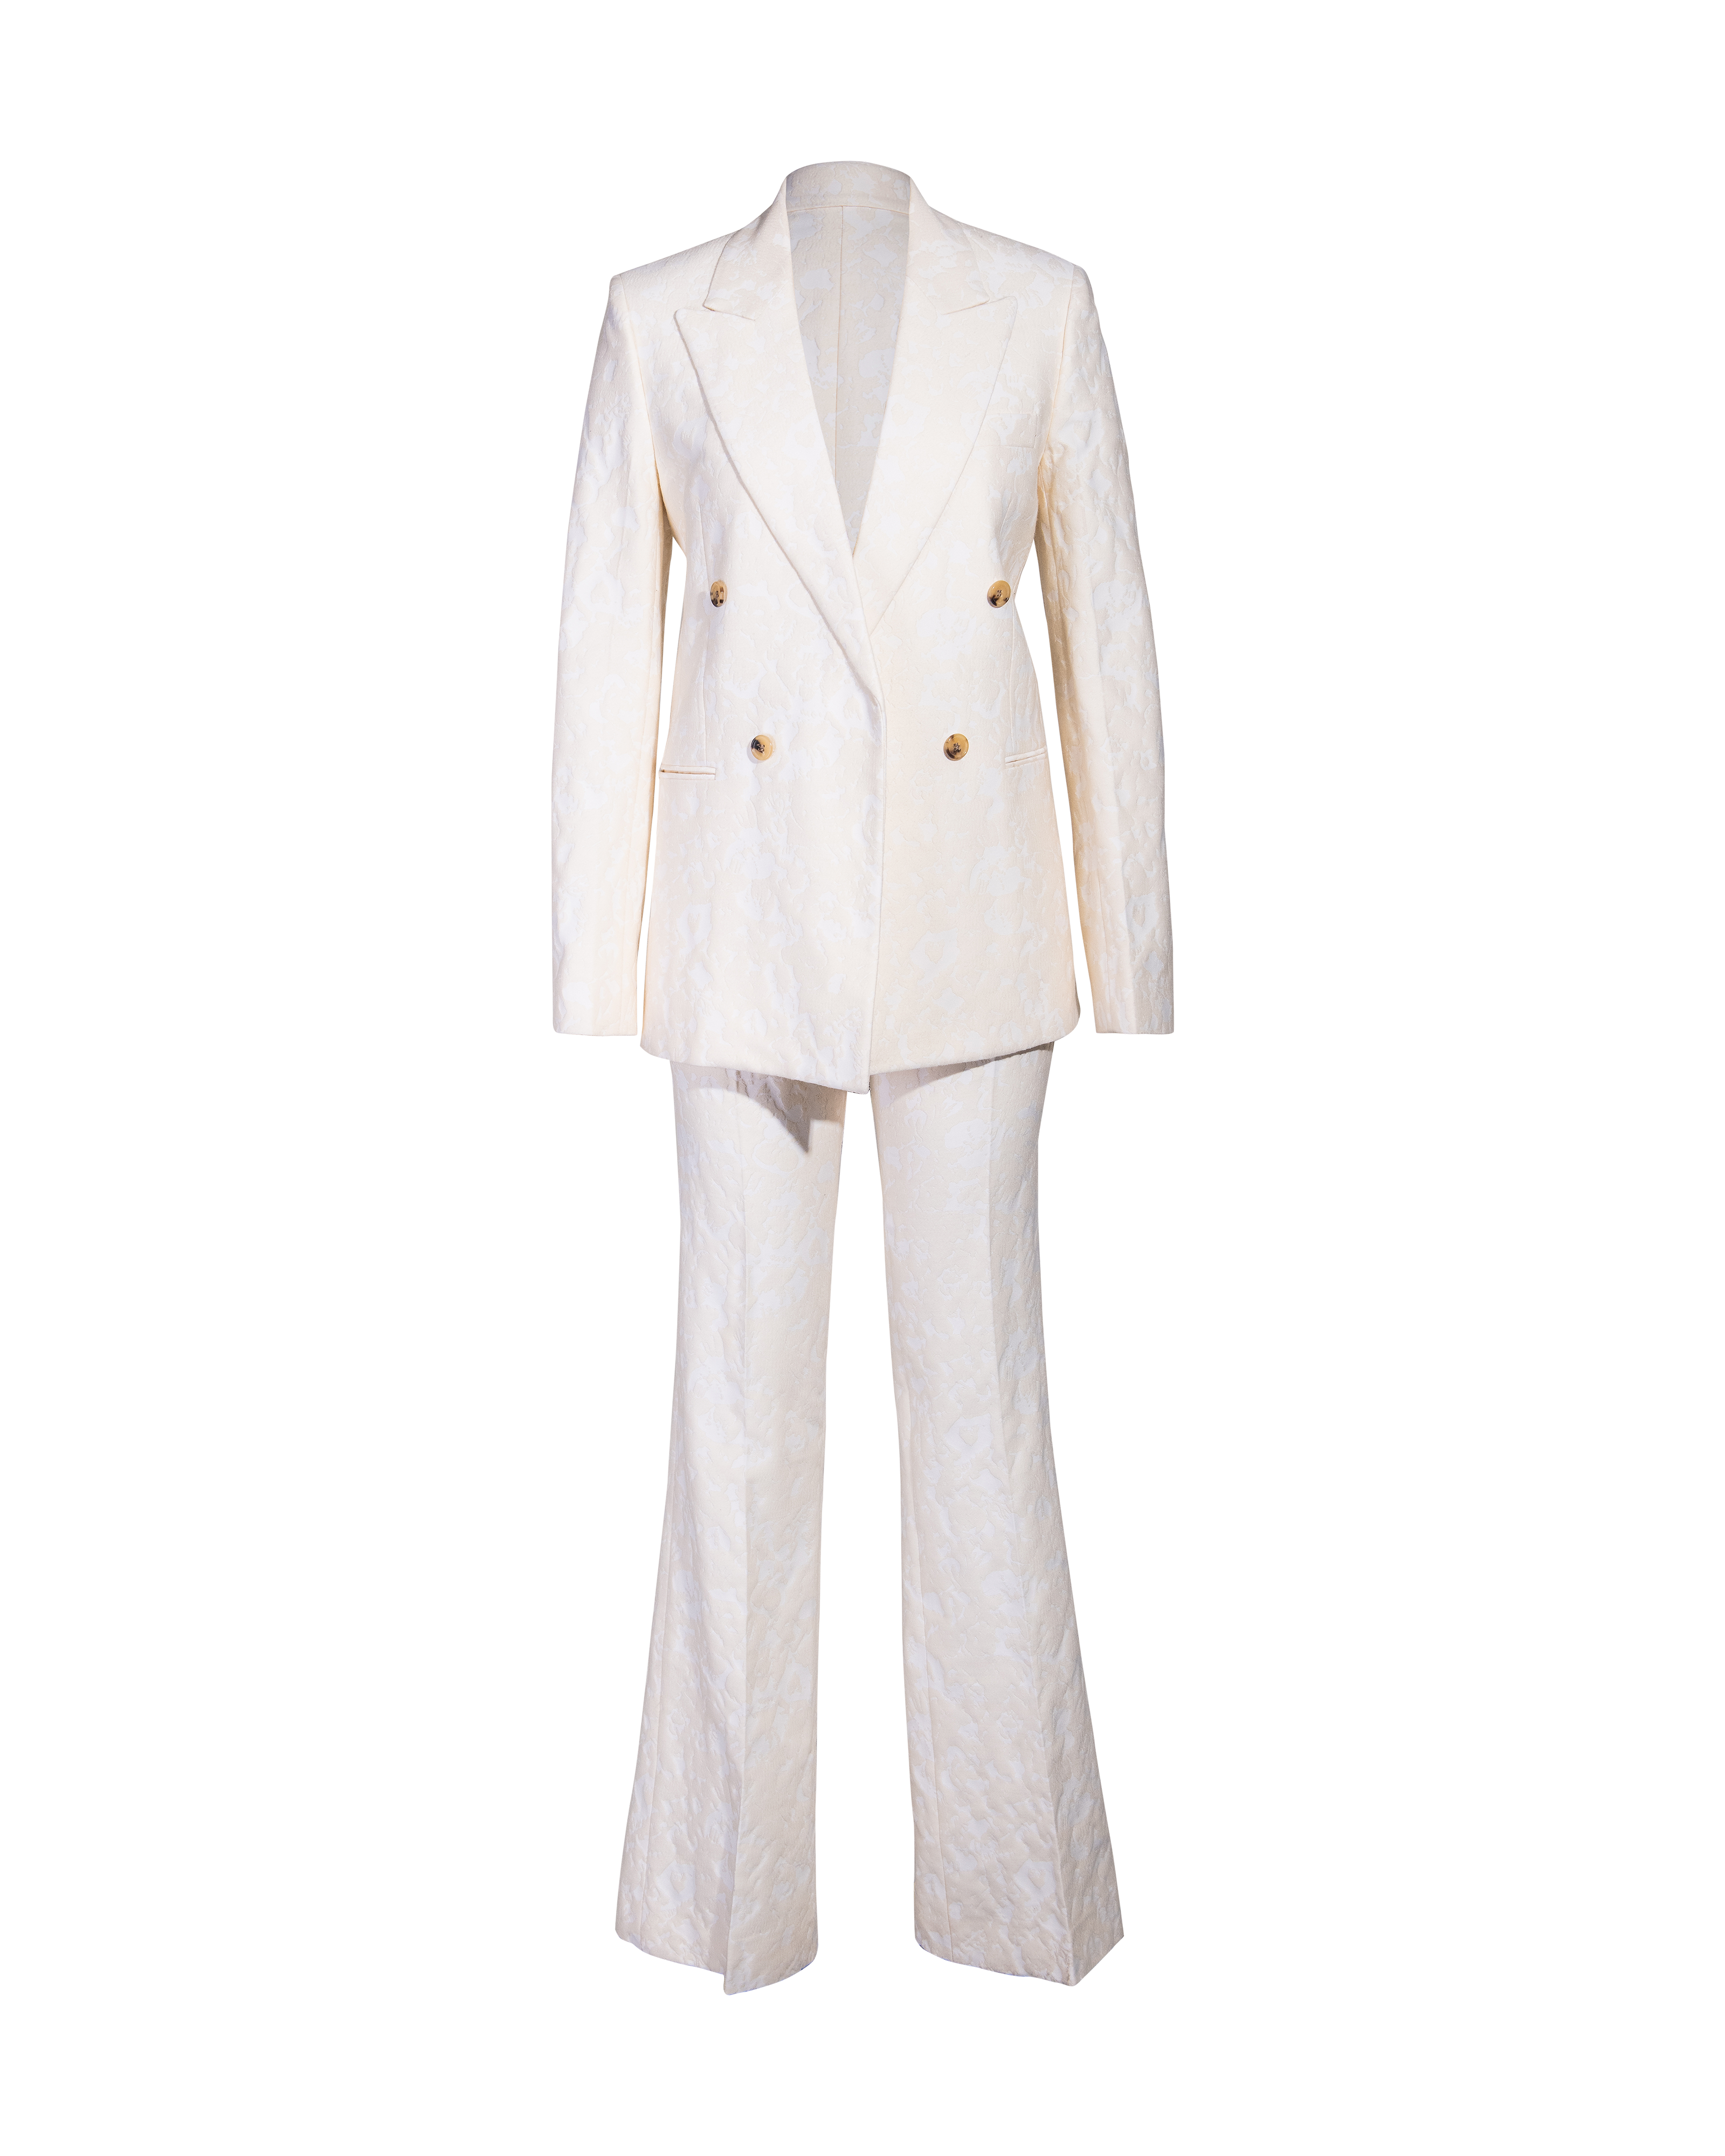 Resort 2013 Phoebe Philo Cream Jacquard Pant Suit Set